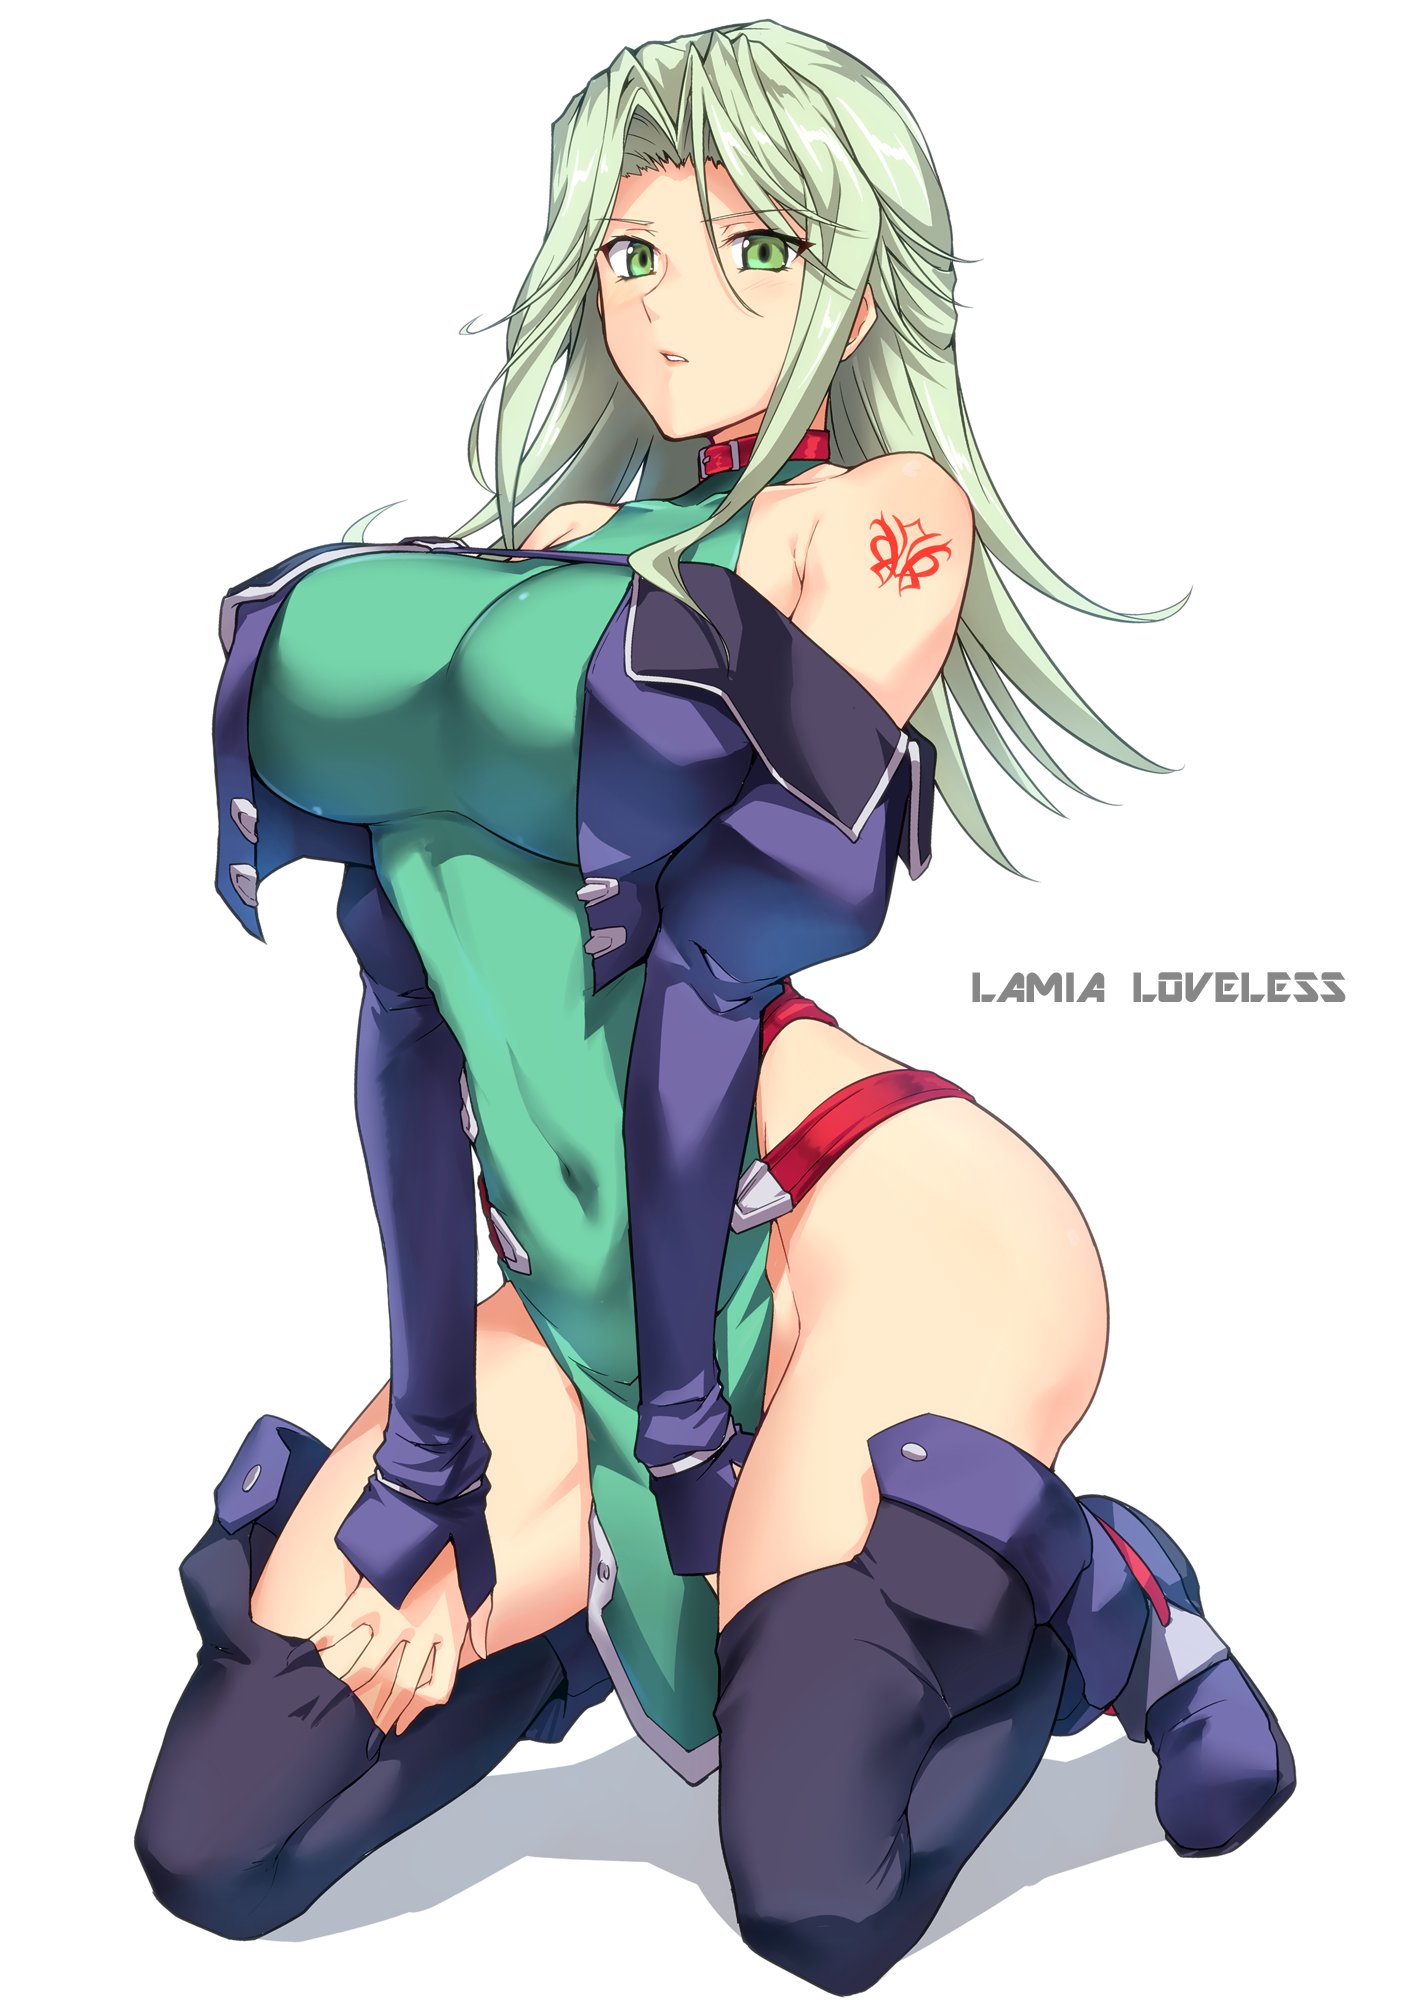 Anime 1416x2000 anime anime girls Lamia Loveless Super Robot Taisen long hair green hair artwork digital art fan art